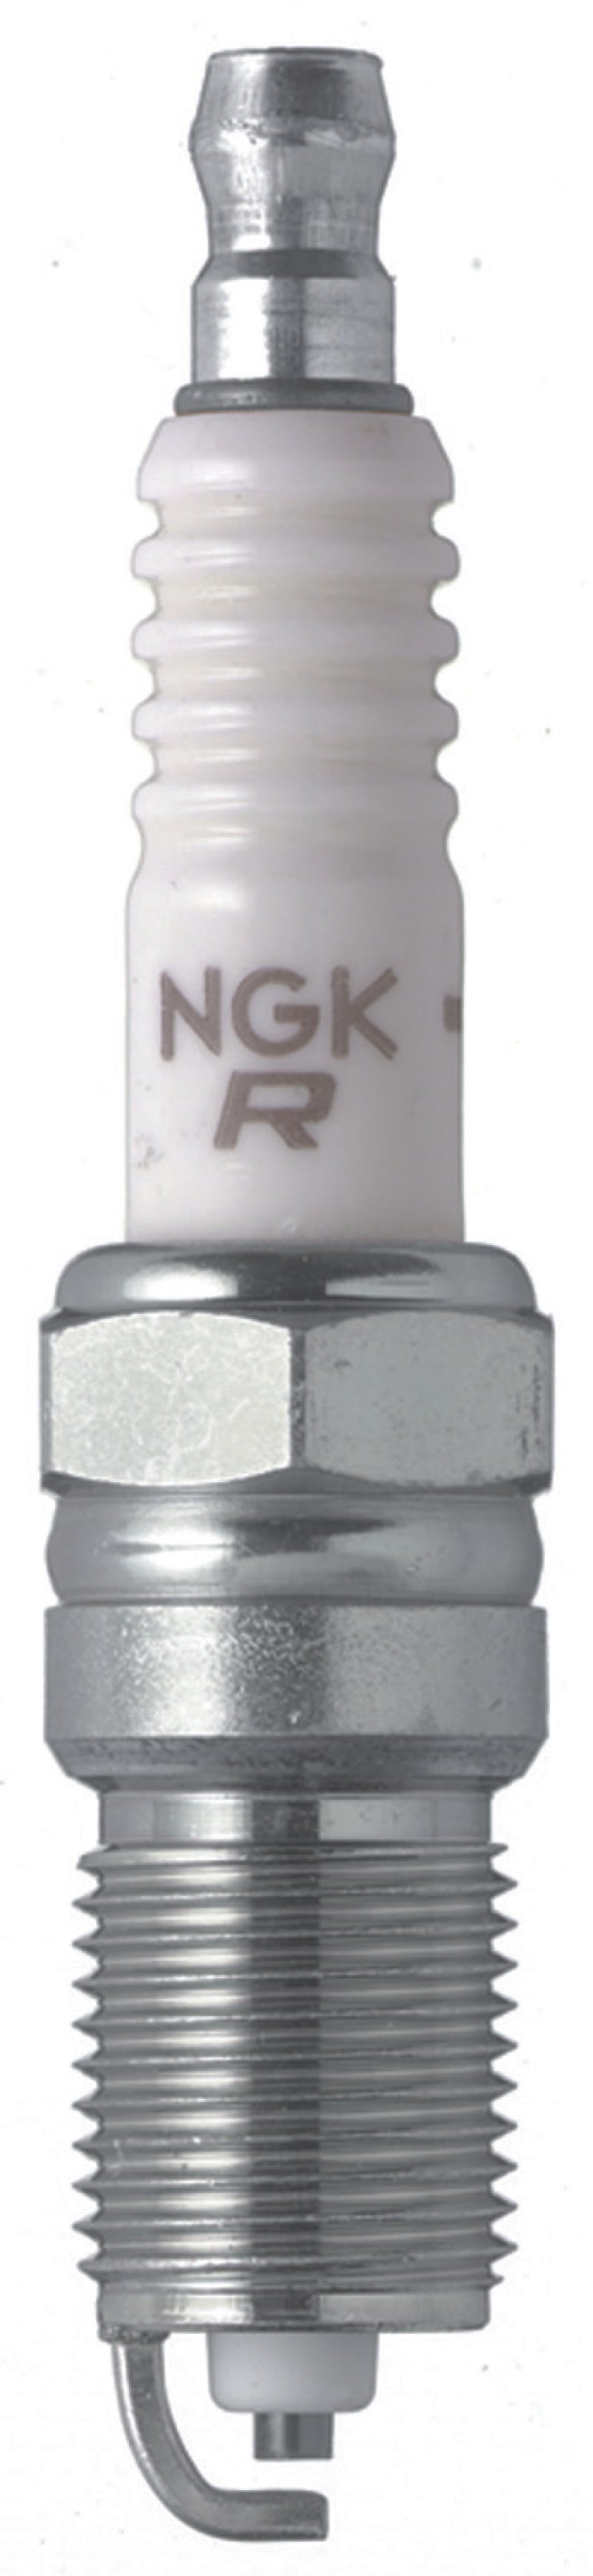 NGK Nickel Spark Plug Box of 4 (TR5).